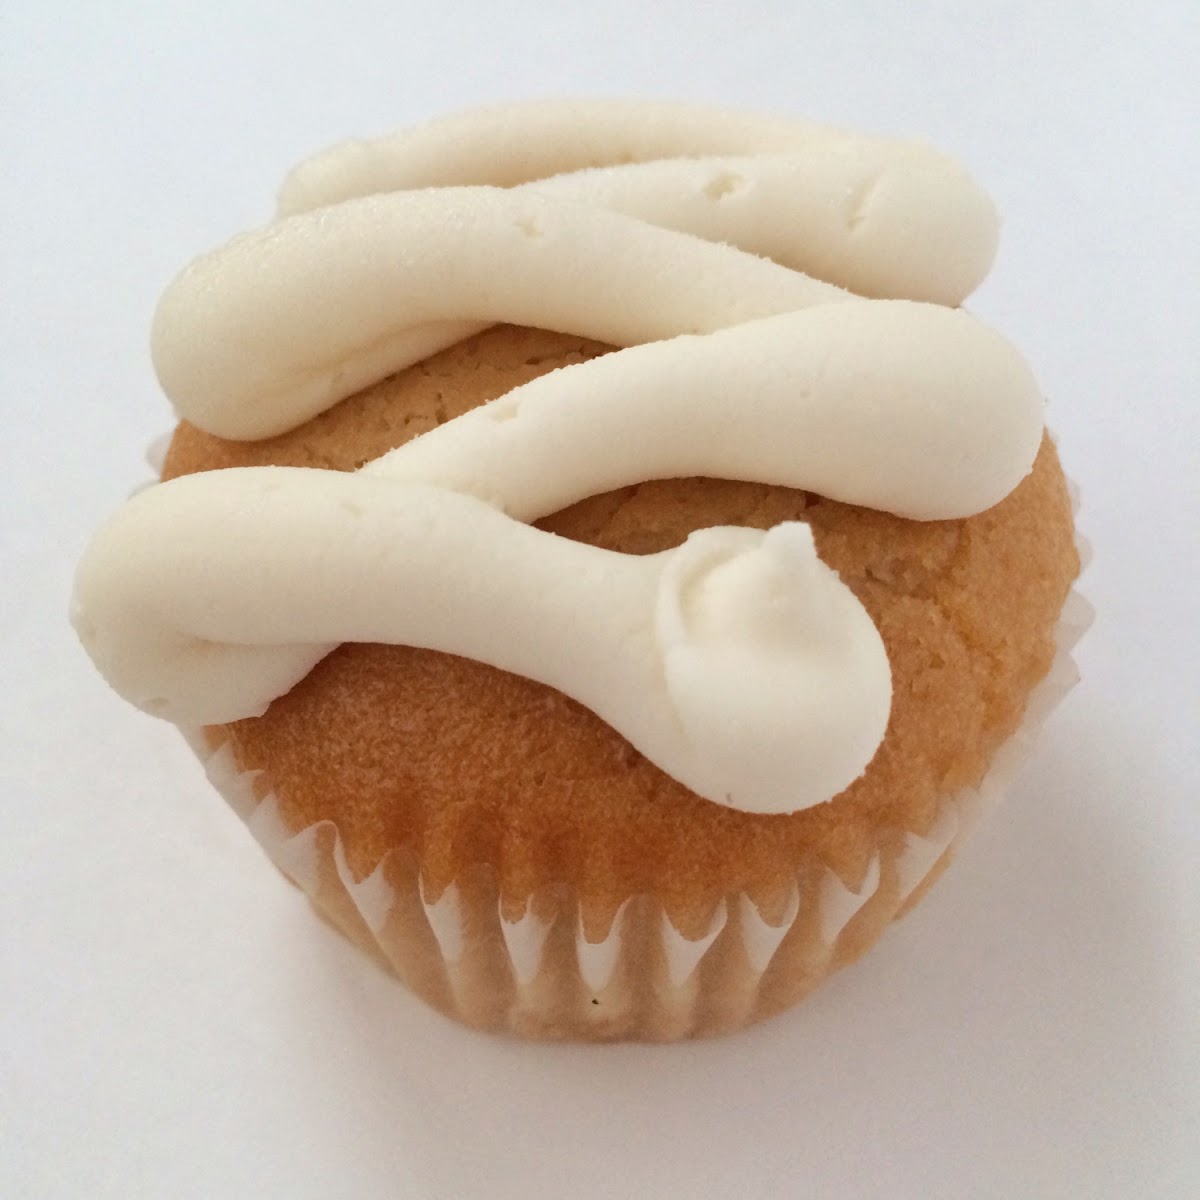 The Vanilla: gluten free, dairy free, egg free, soy free, nut free and peanut free.